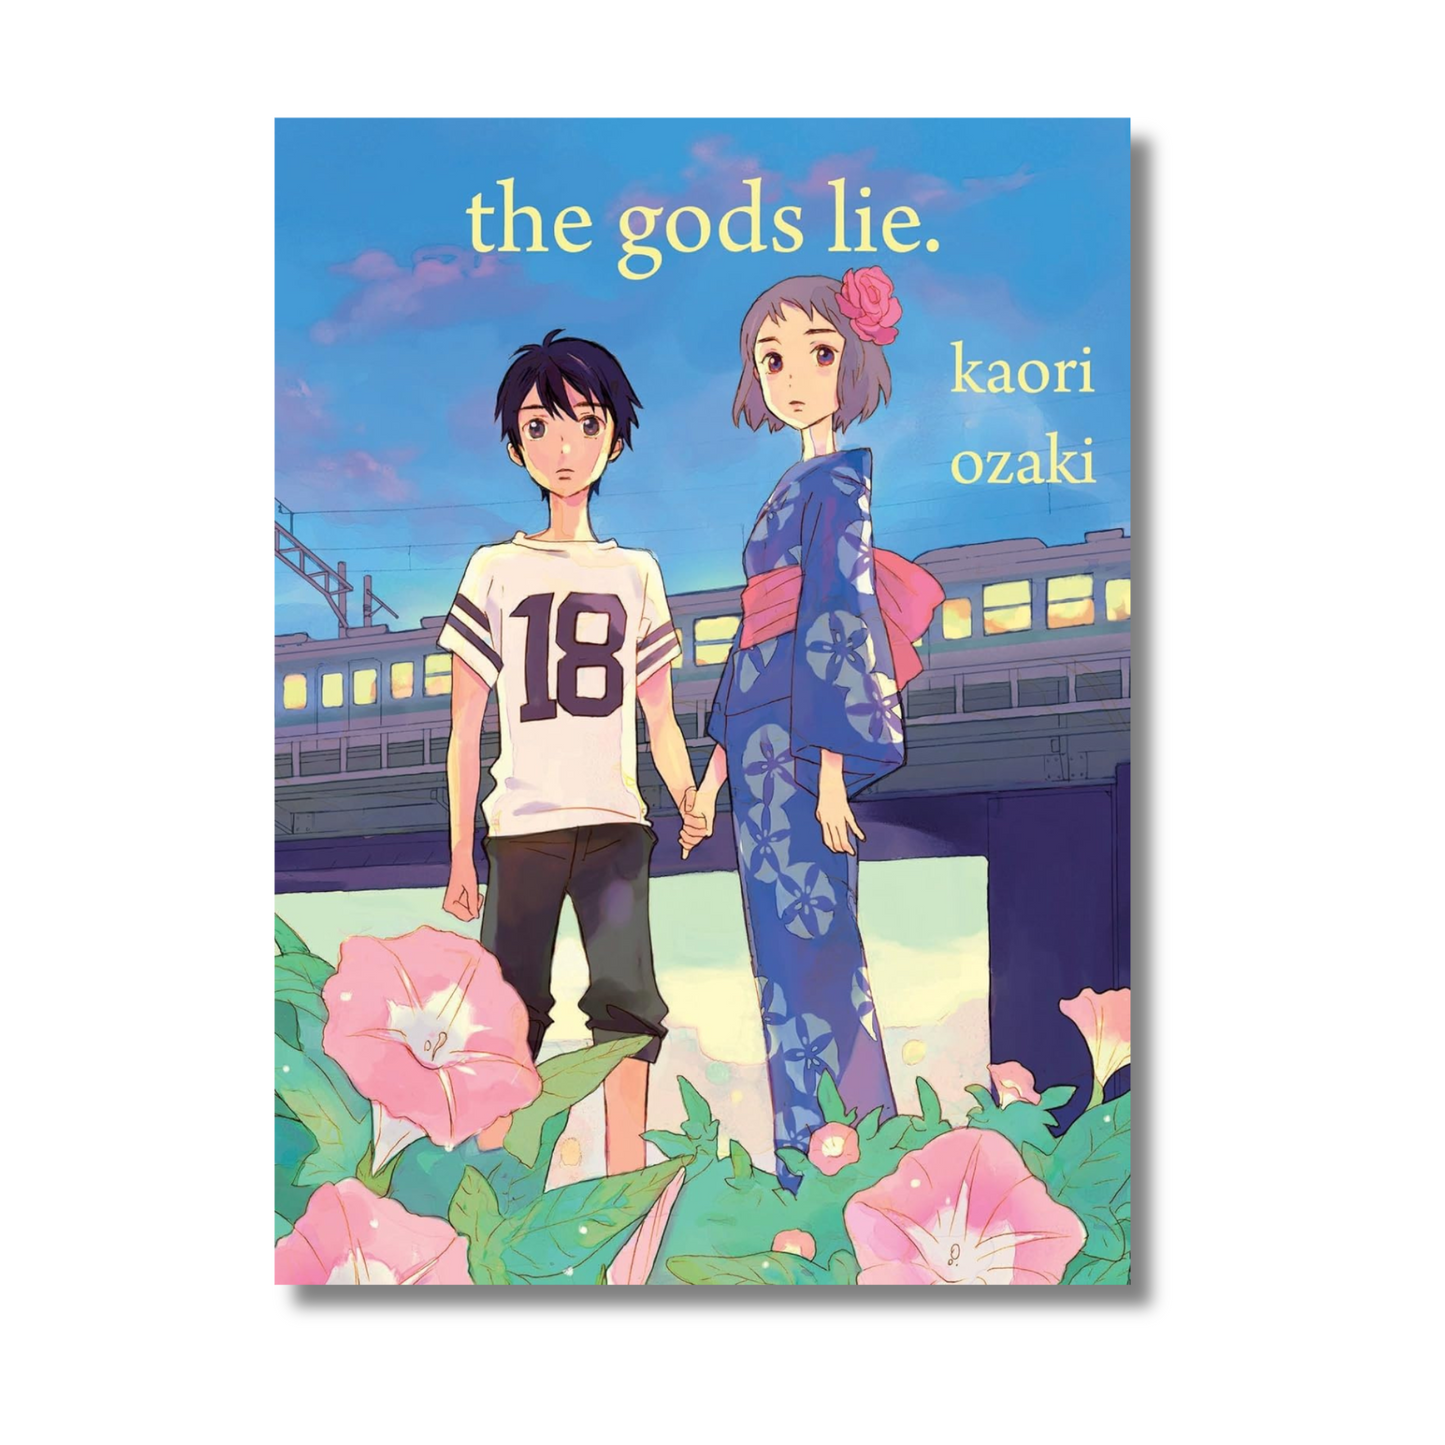 The Gods Lie By Kaori Ozaki (Paperback)